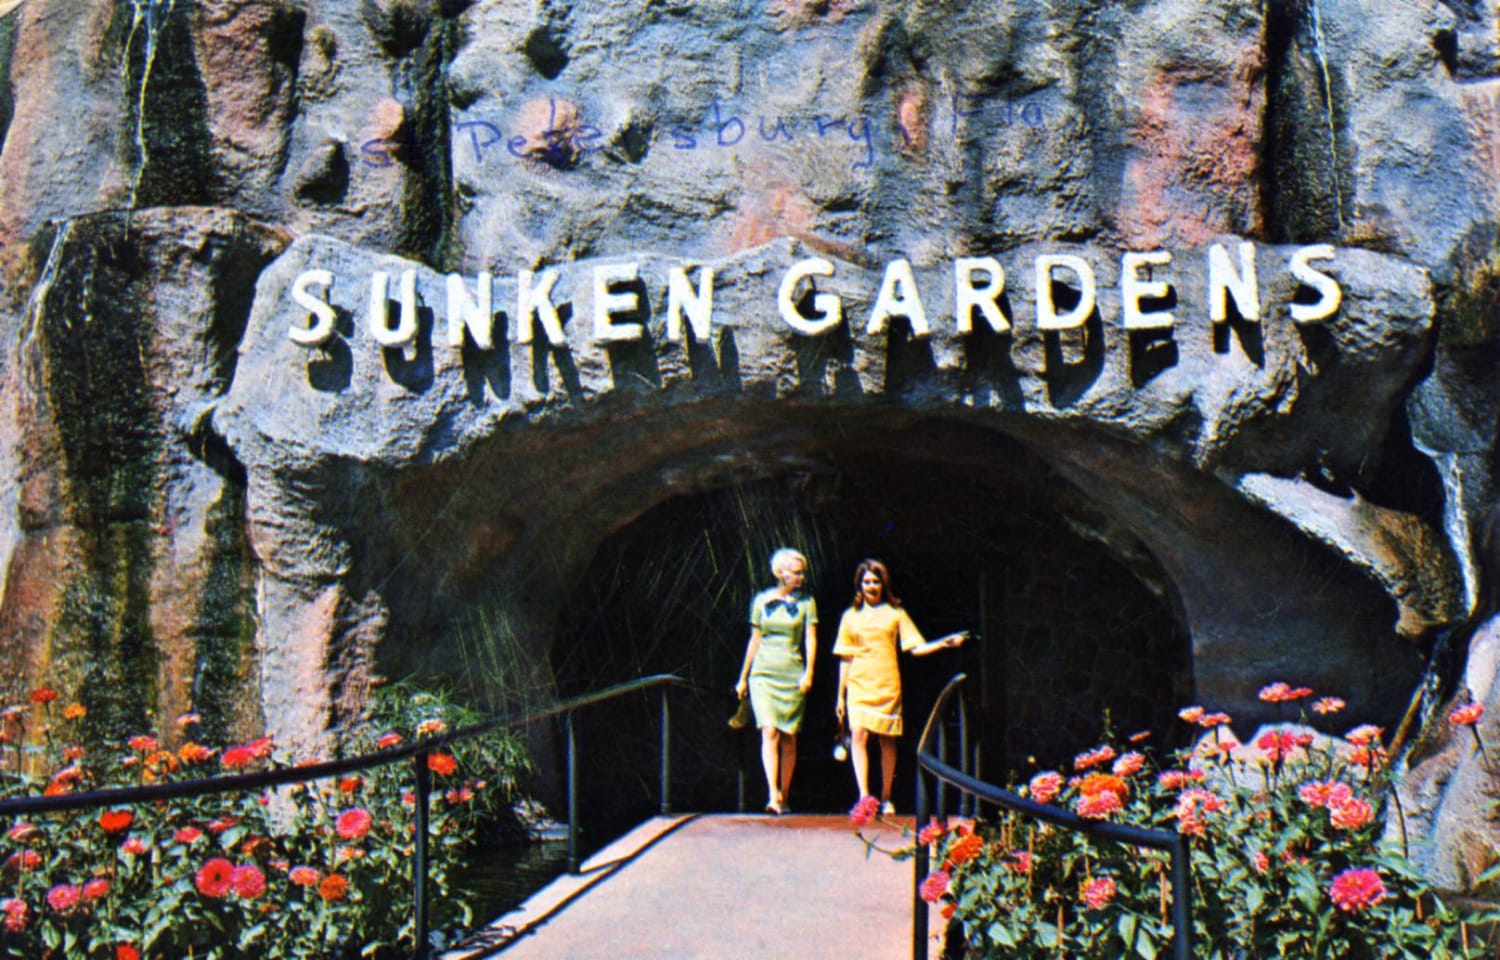 sunken-gardens-gift-shop-attractions-complex-st-petersburg-fl_15417663548_o